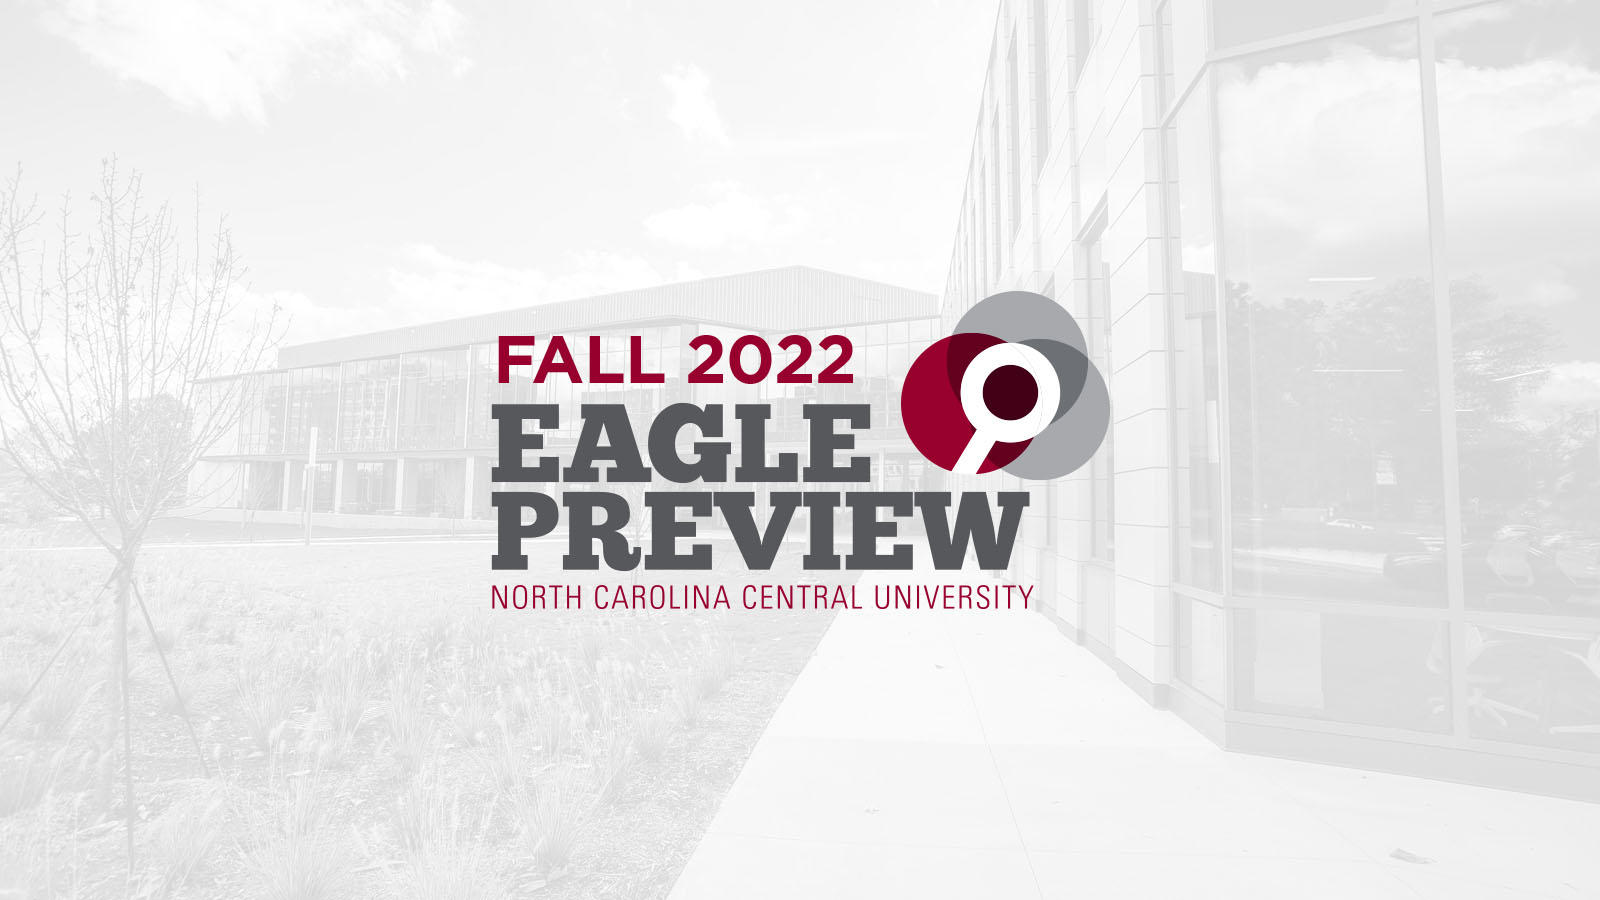 Fall 2022 Eagle Preview North Carolina Central University